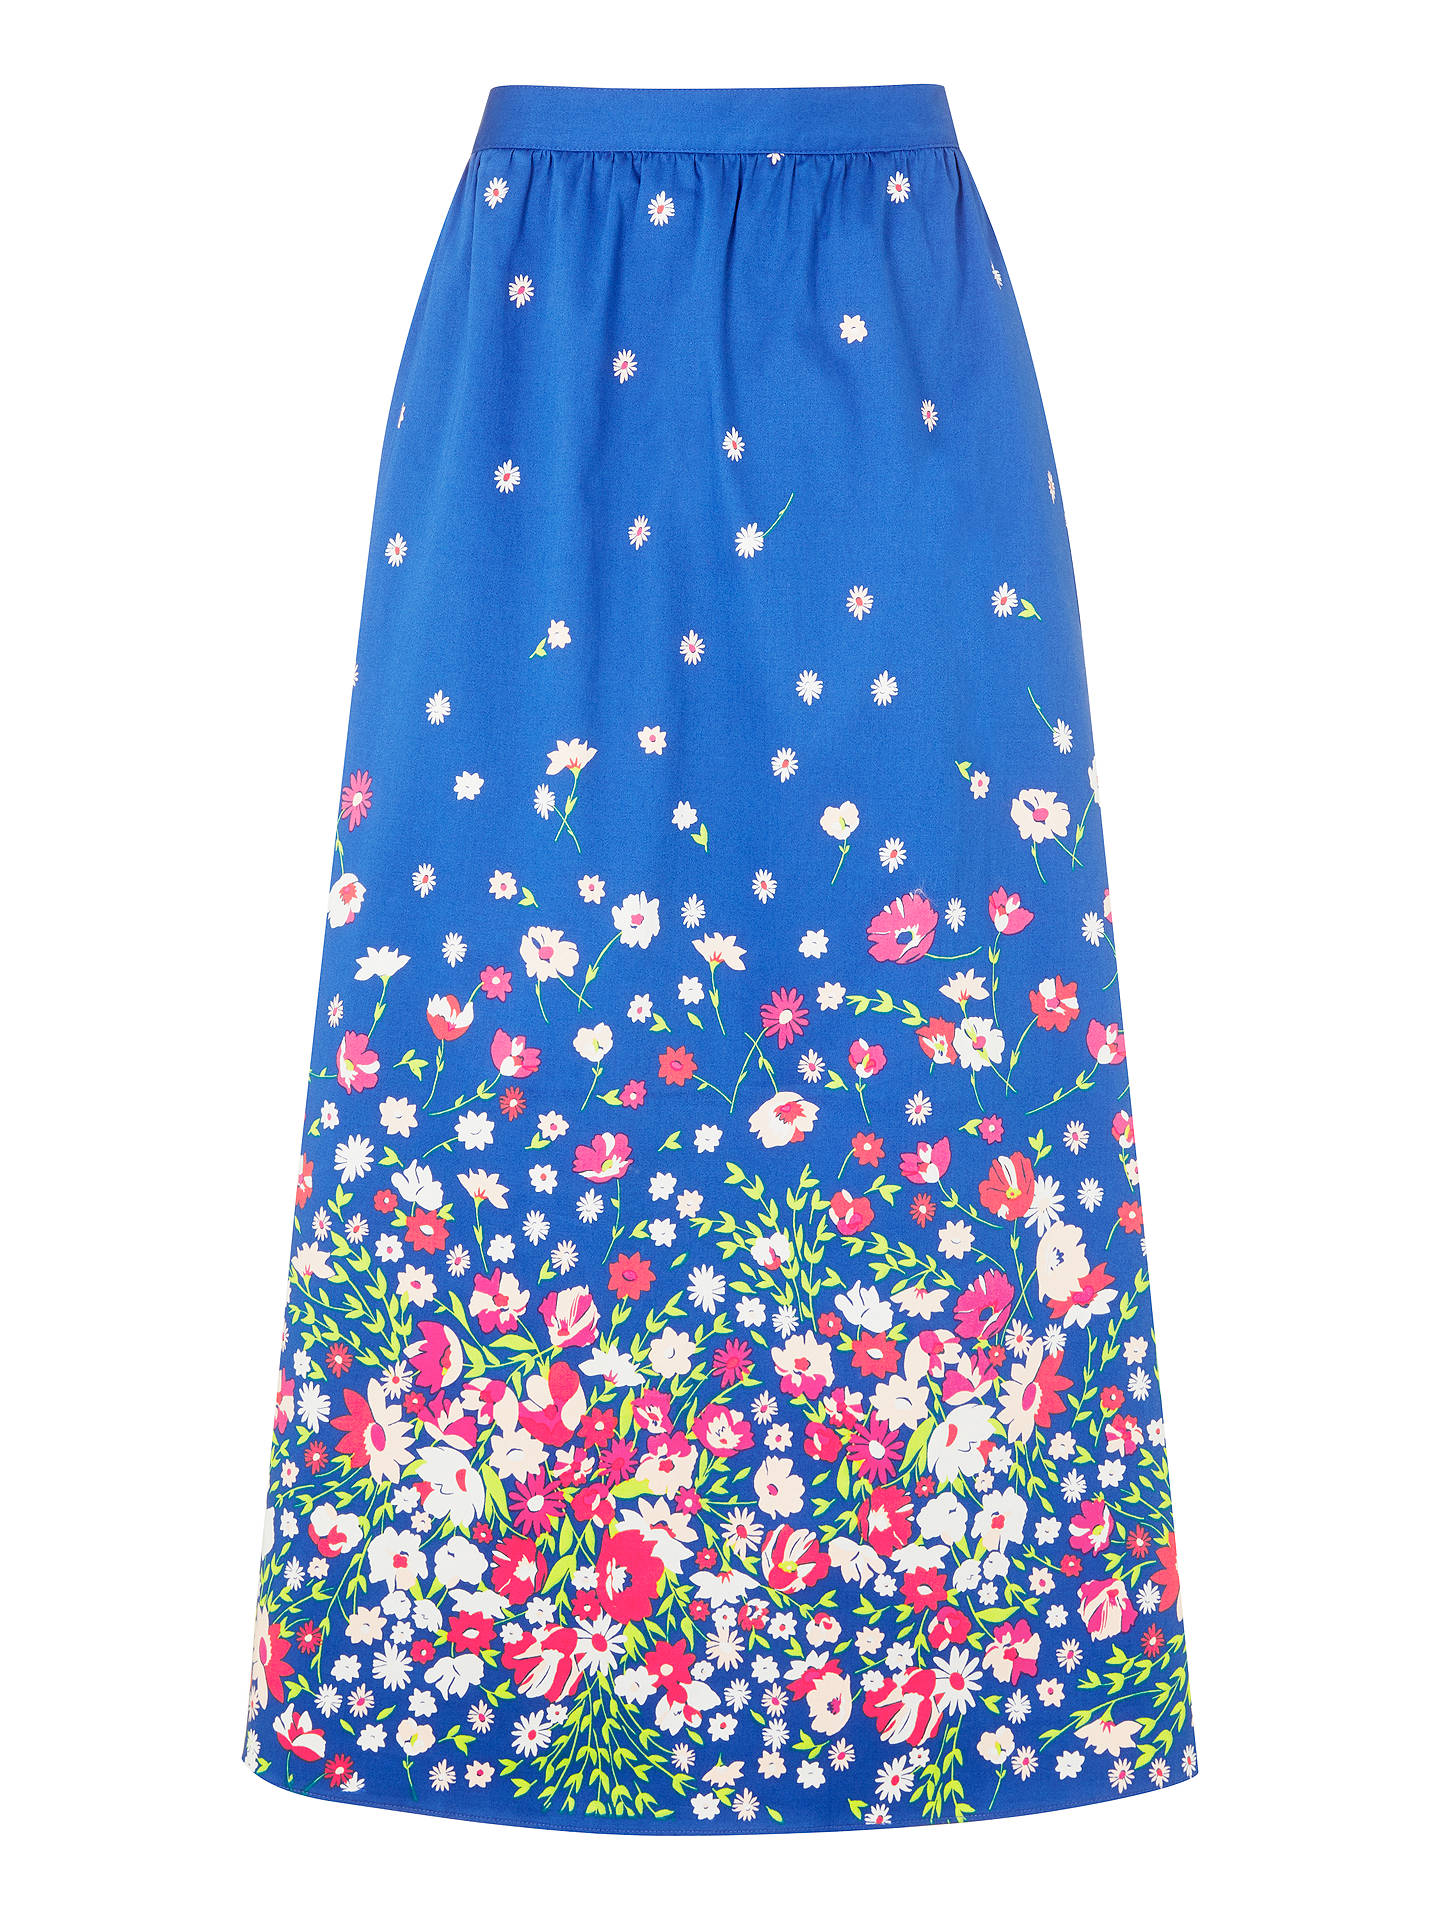 Boden Emelia Midi Skirt, Blue Floral Placement at John Lewis & Partners